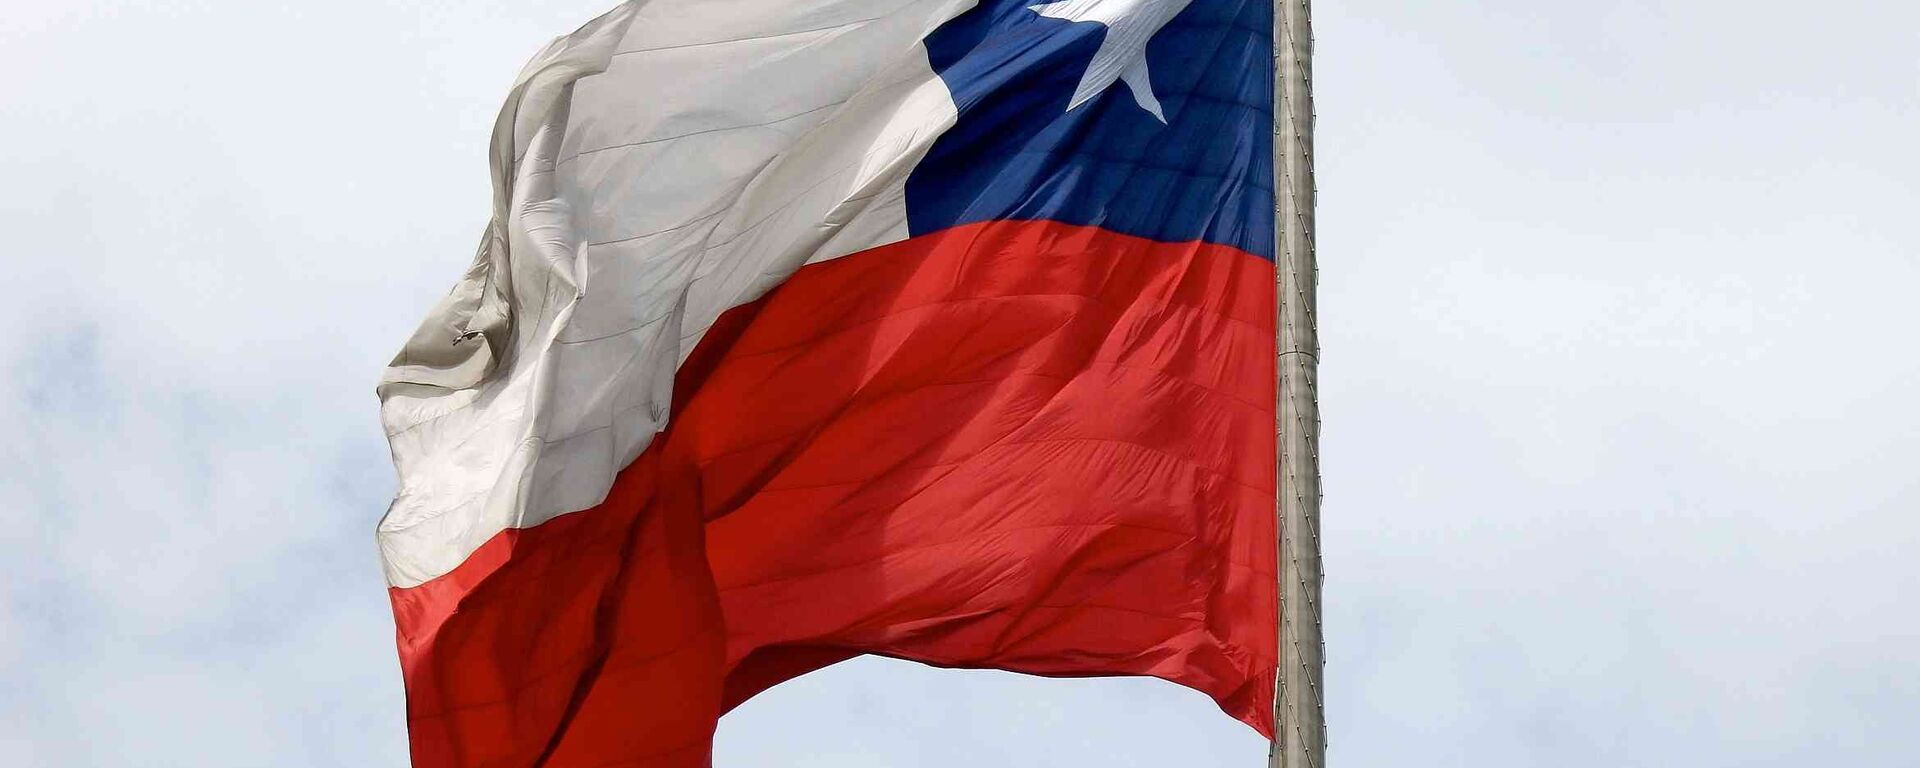 Bandera de Chile - Sputnik Mundo, 1920, 19.11.2021